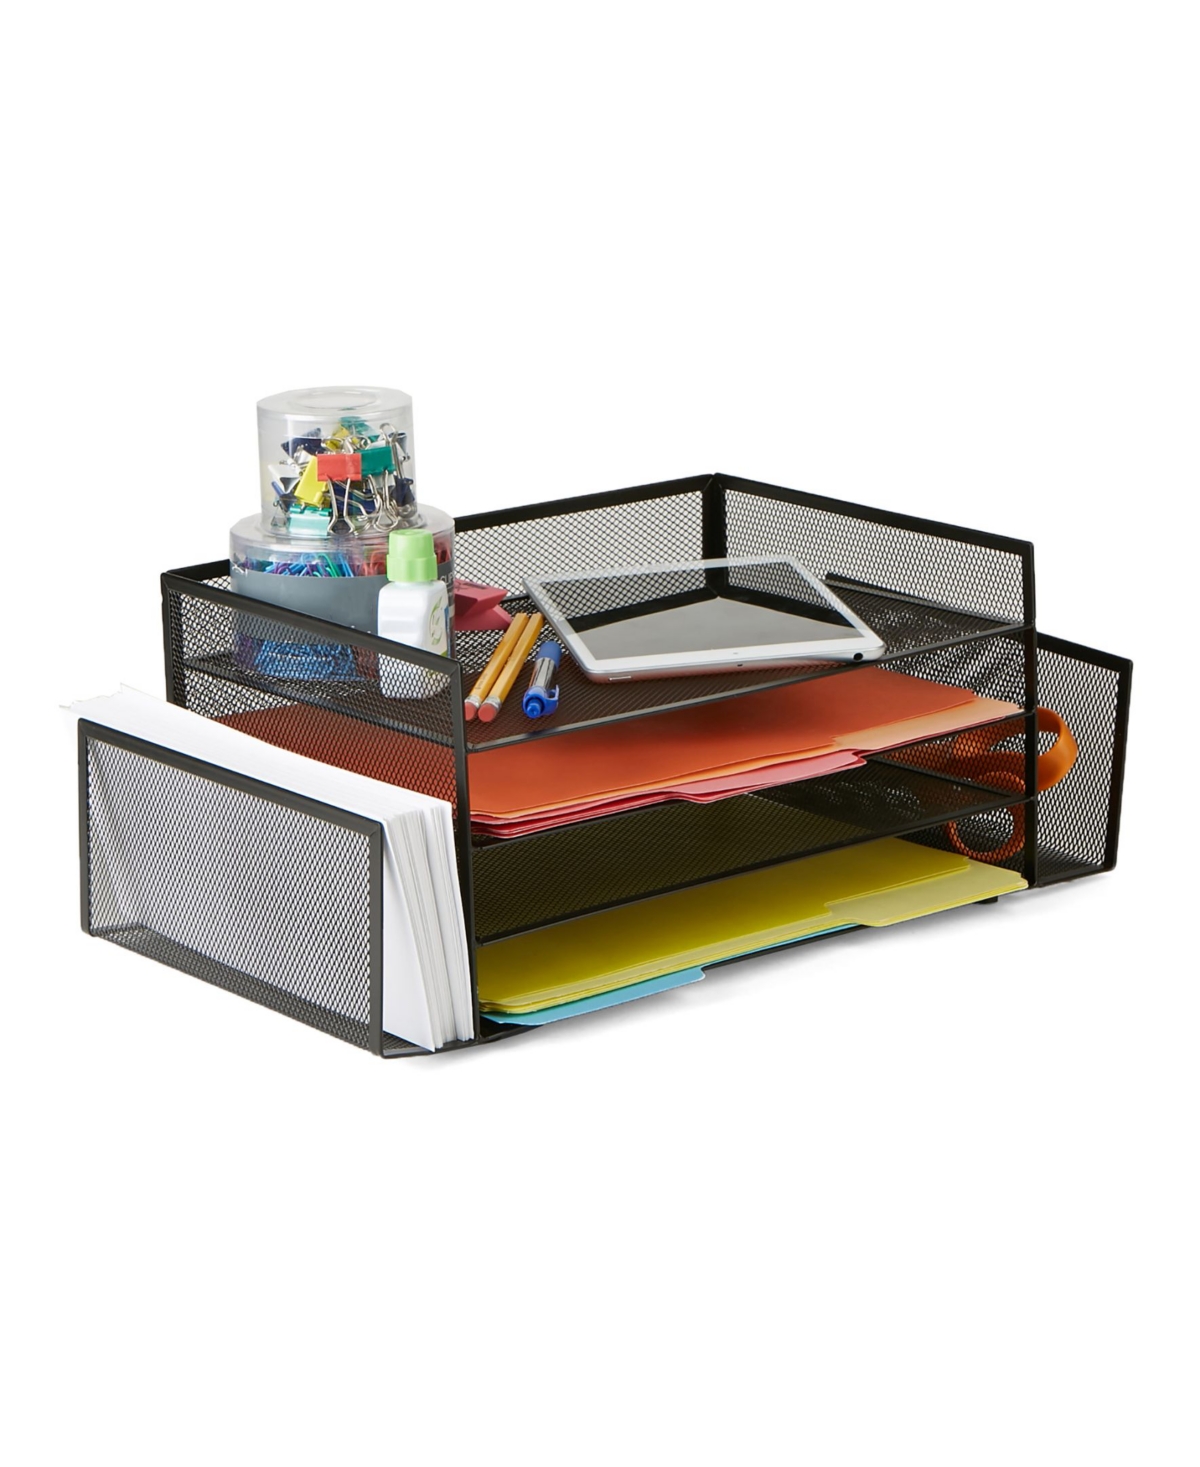 Desk Organizer with 2 Side Storage Compartments - Black